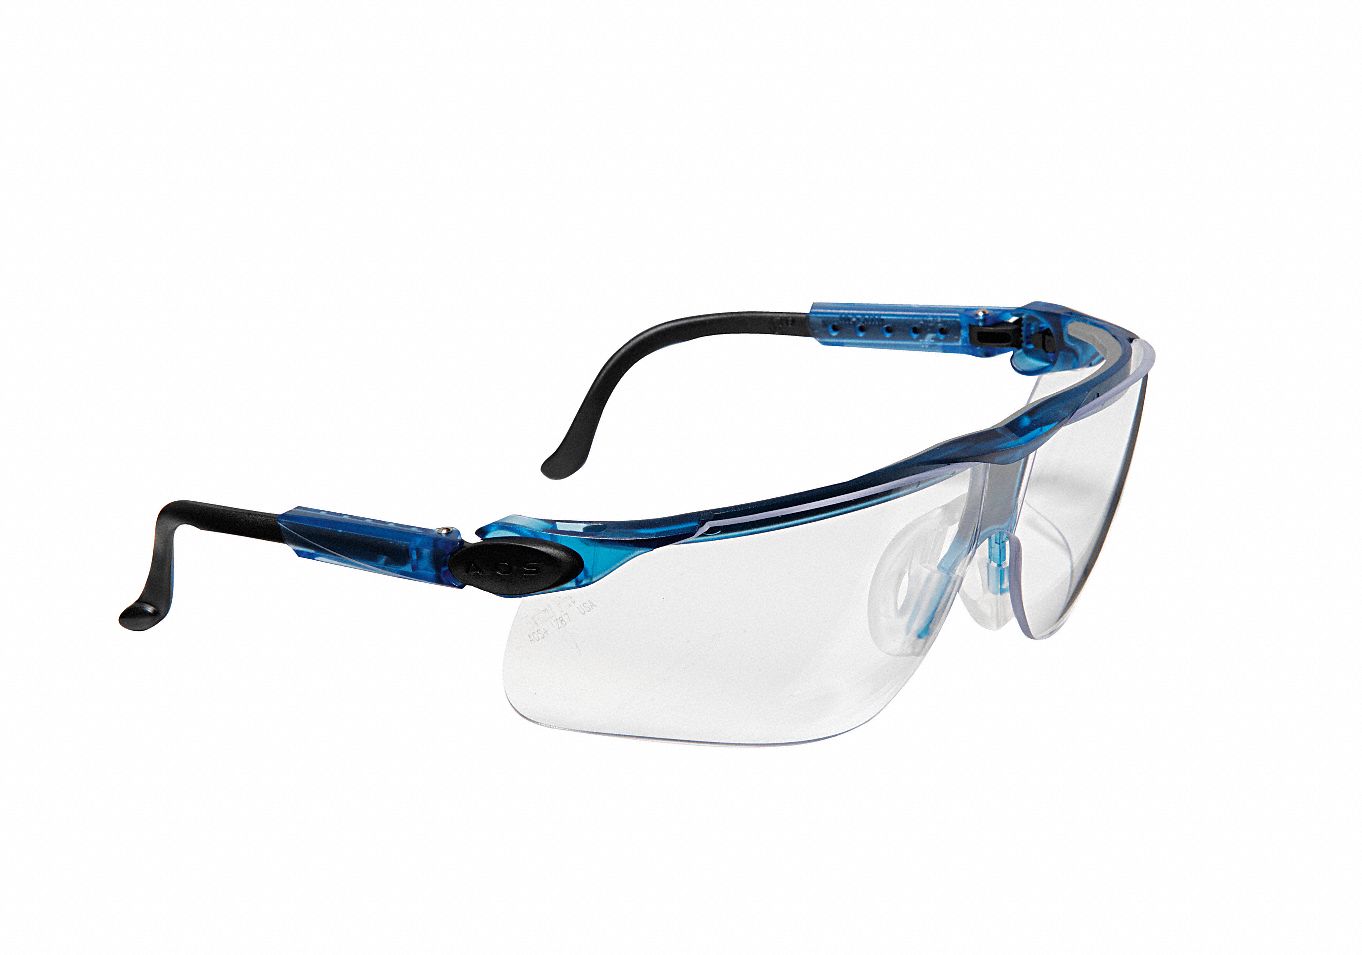 Safety Glasses,Gray,Antfg,Scrtch-Rsstnt